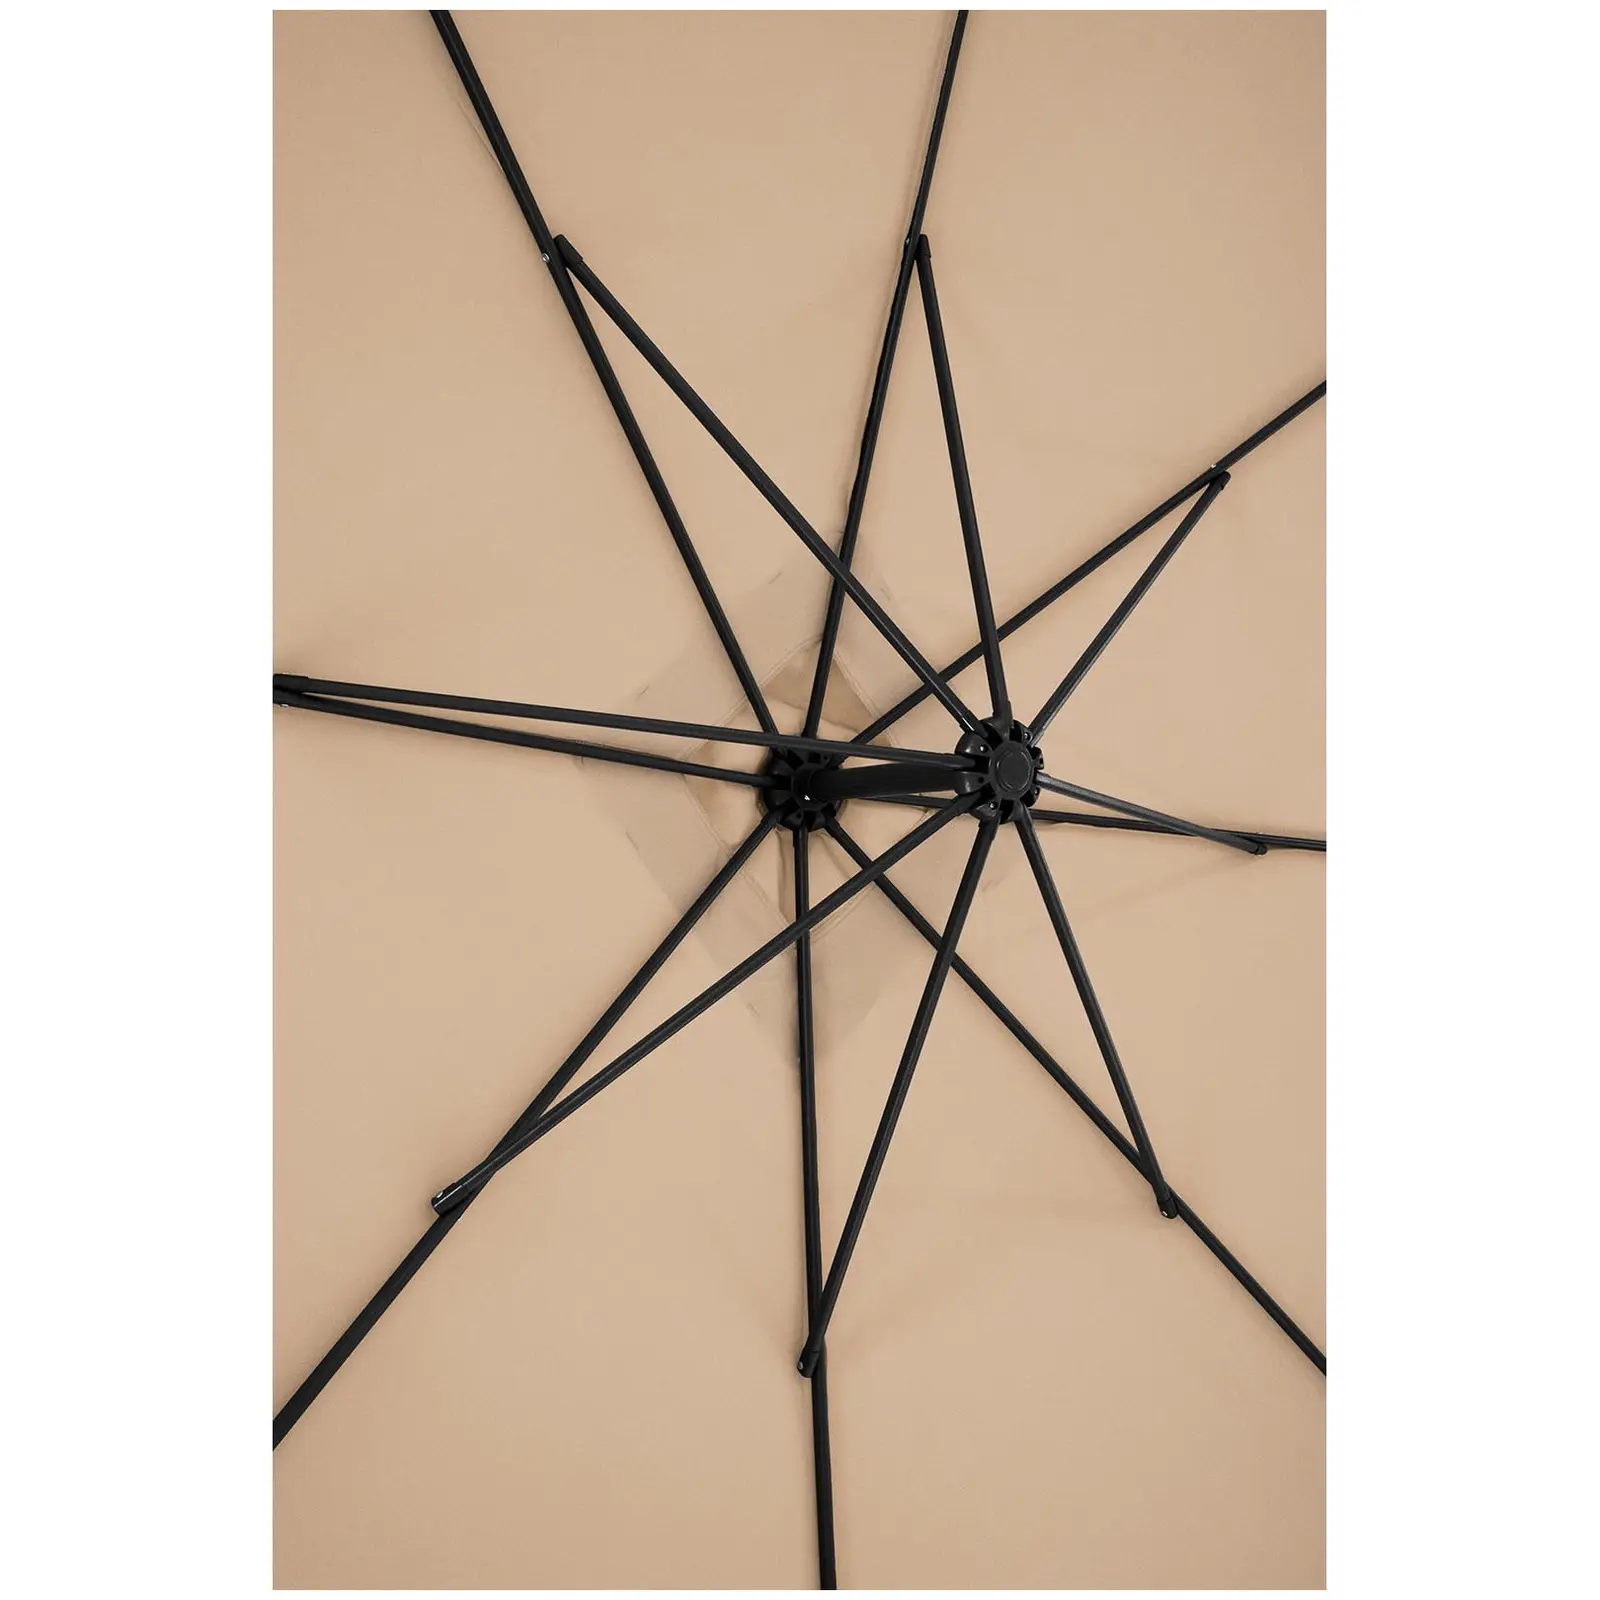 Factory second Garden umbrella - Cream - Square - 250 x 250 cm - Tiltable